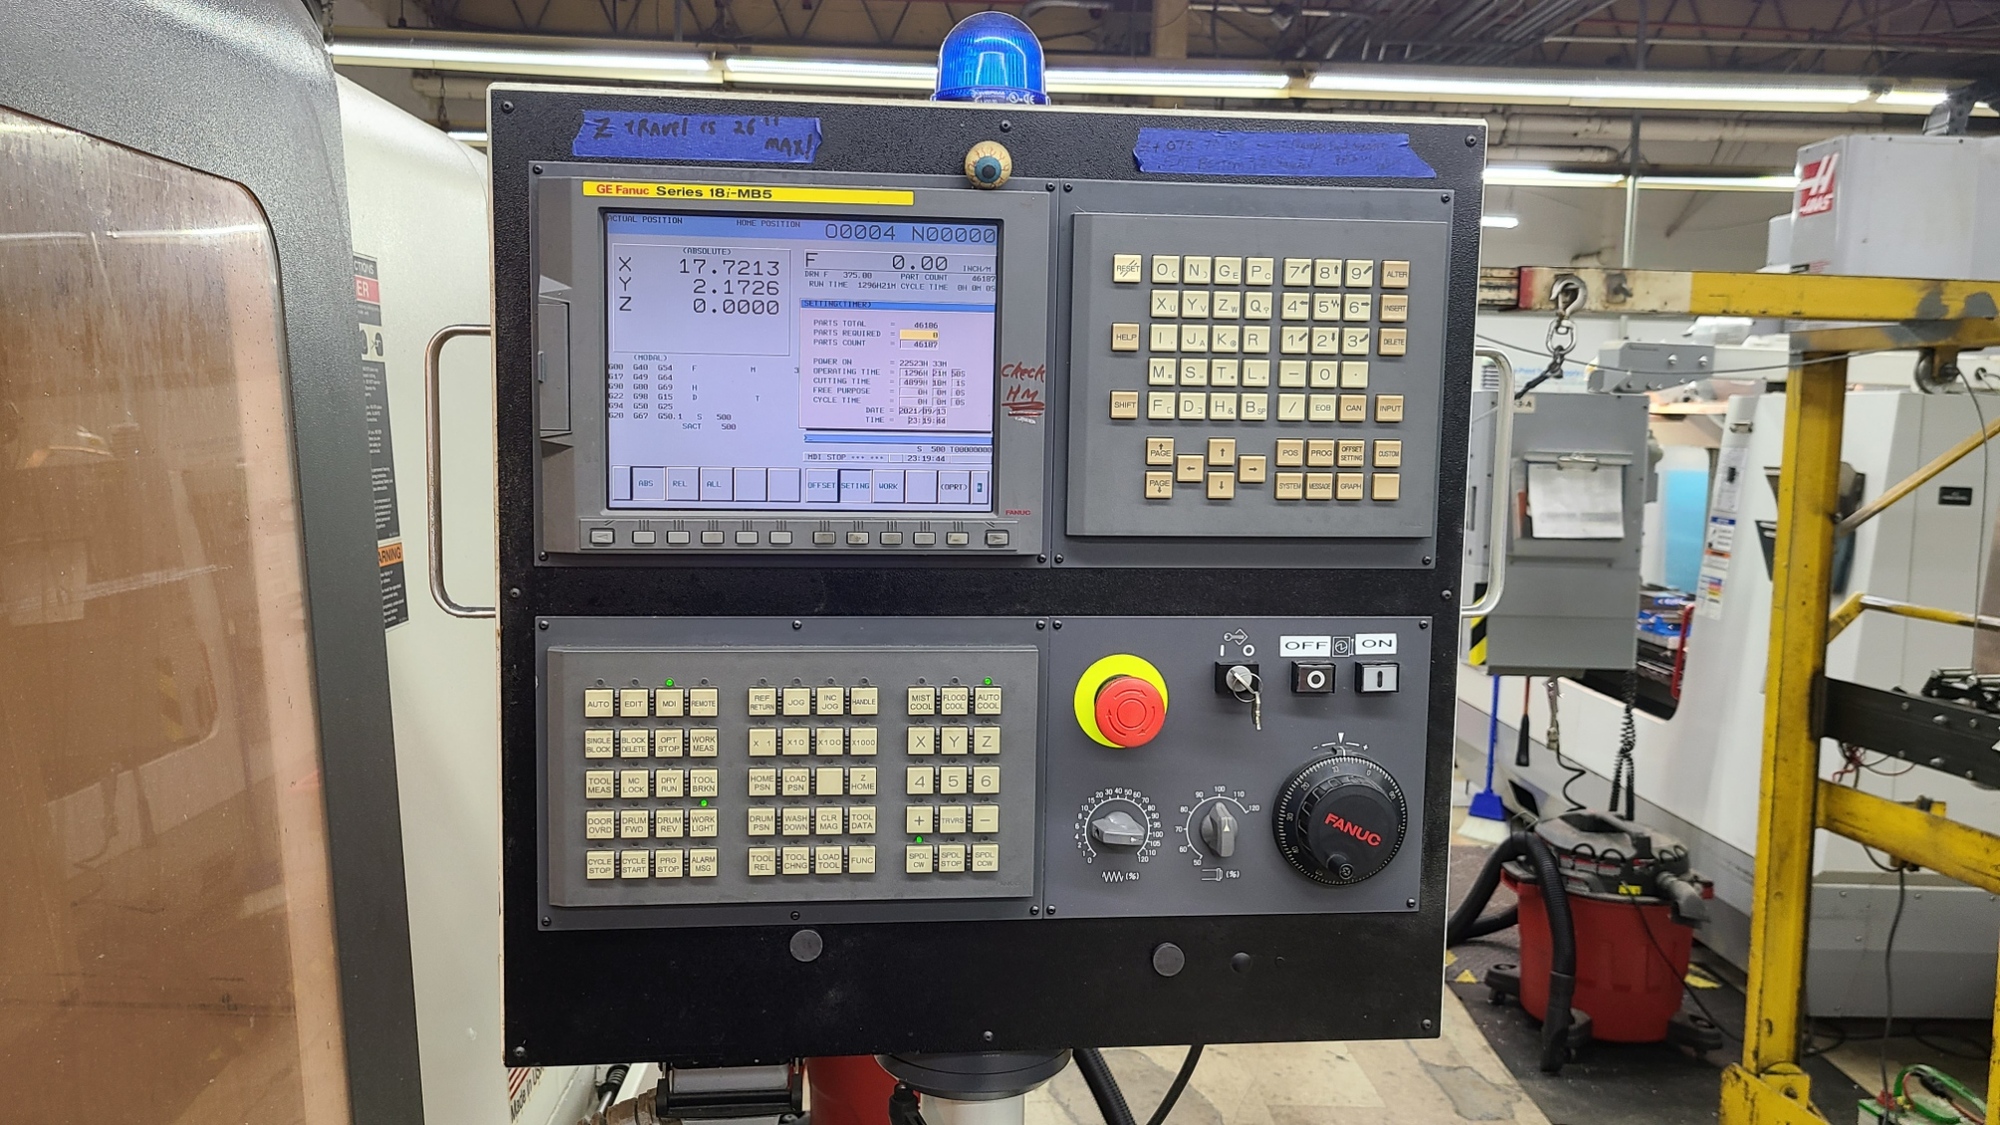 2006 FADAL 6030 HT MACHINING CENTERS, VERT., N/C & CNC | Prime Machinery